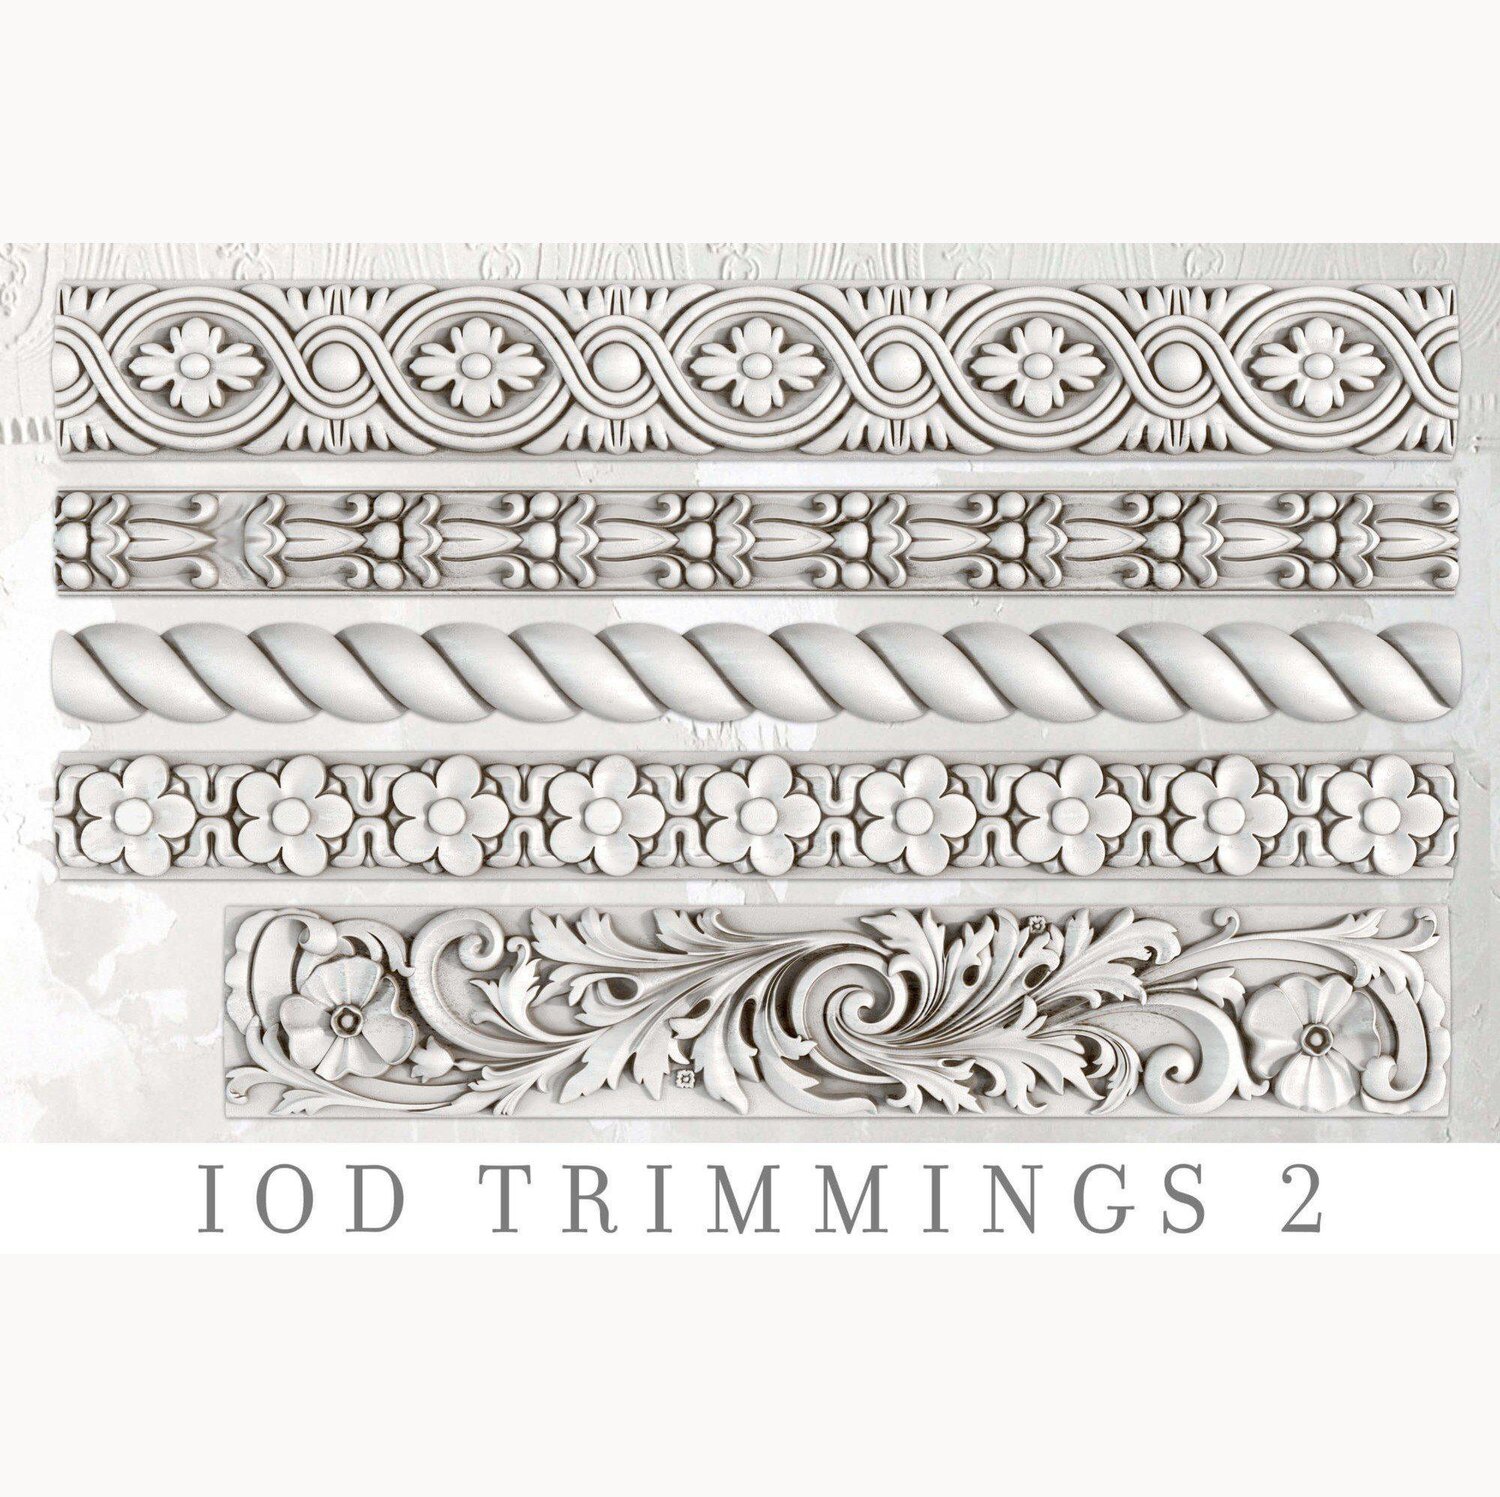 Trimming 2 - IOD Mould (6″X10″) — Rustic Chalk Decor